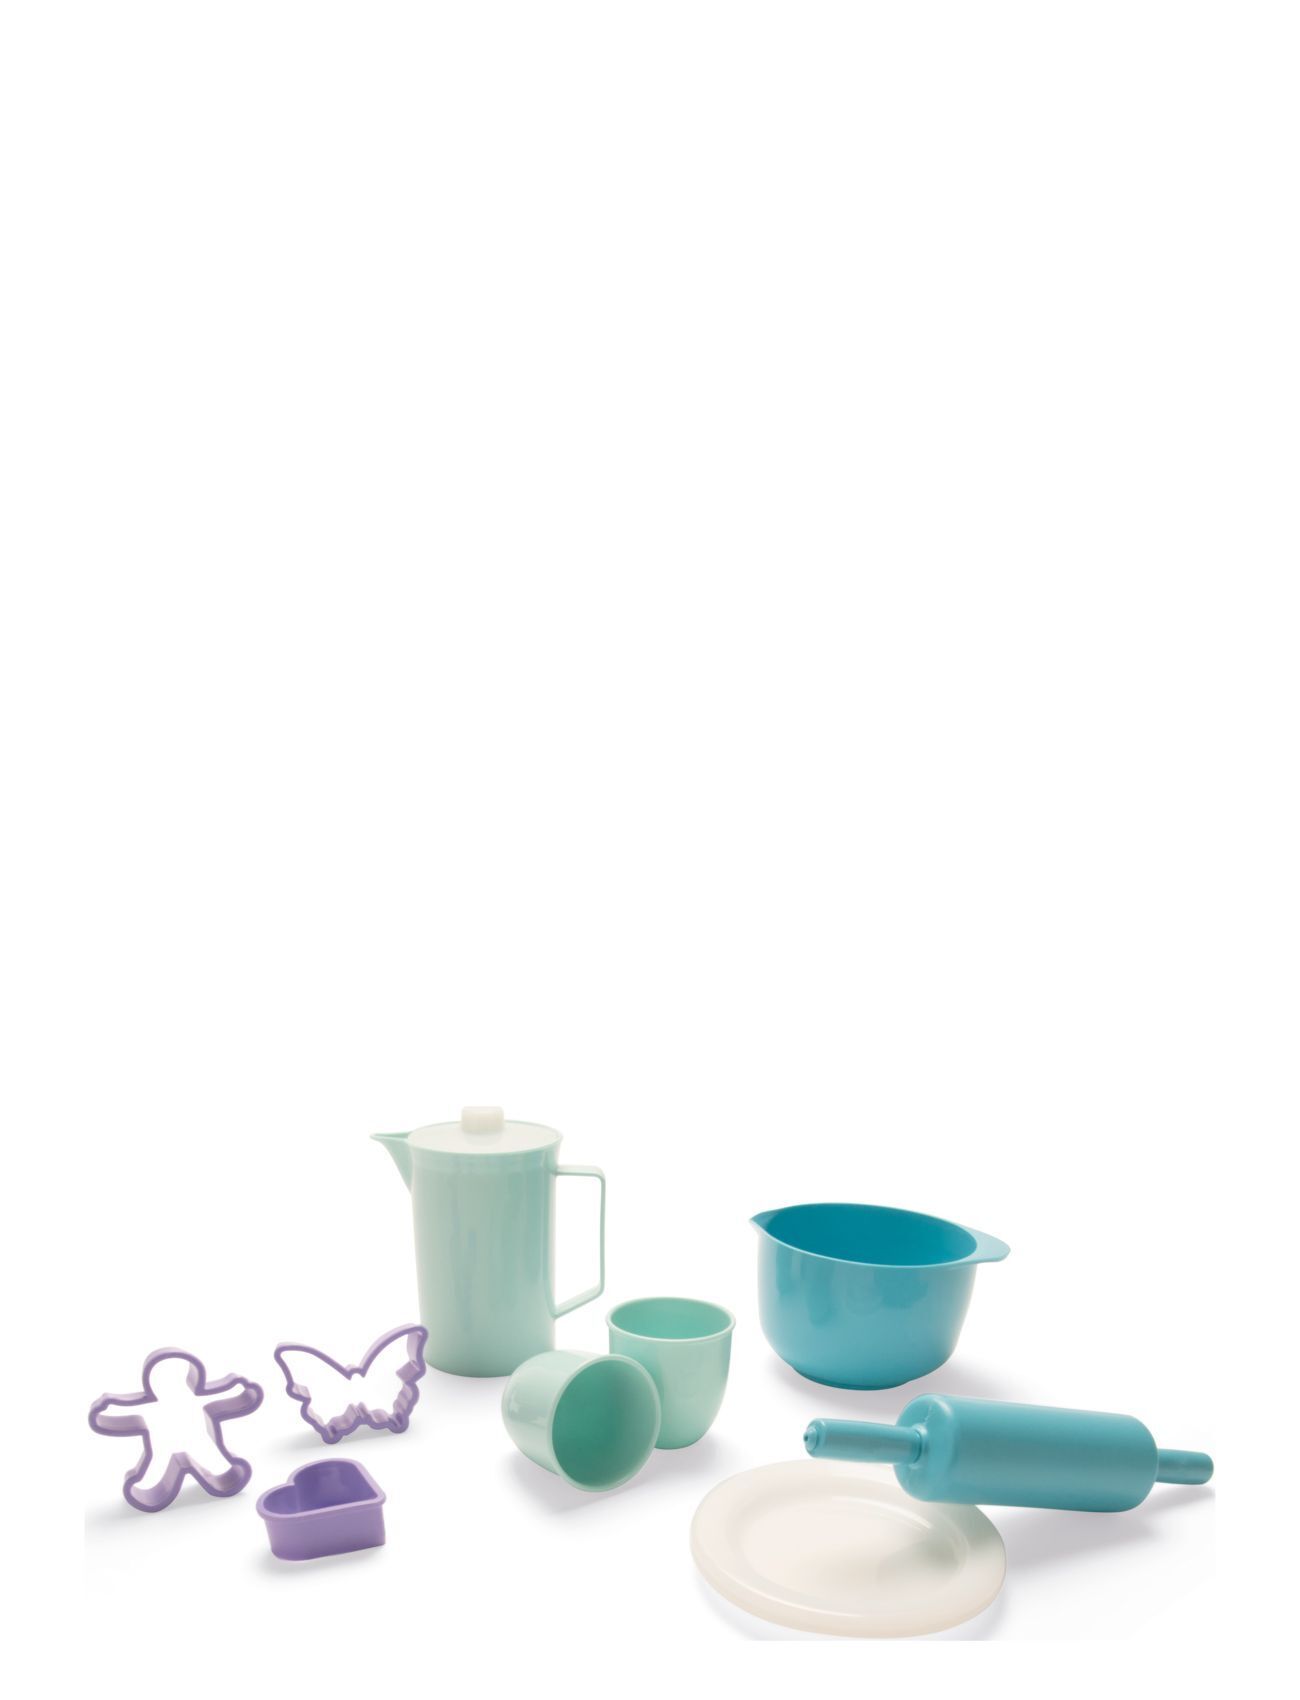 Dantoy Thorbjorn Coffee And Baking Set In Box Toys Toy Kitchen & Accessories Toy Kitchen Accessories Multi/mønstret Dantoy